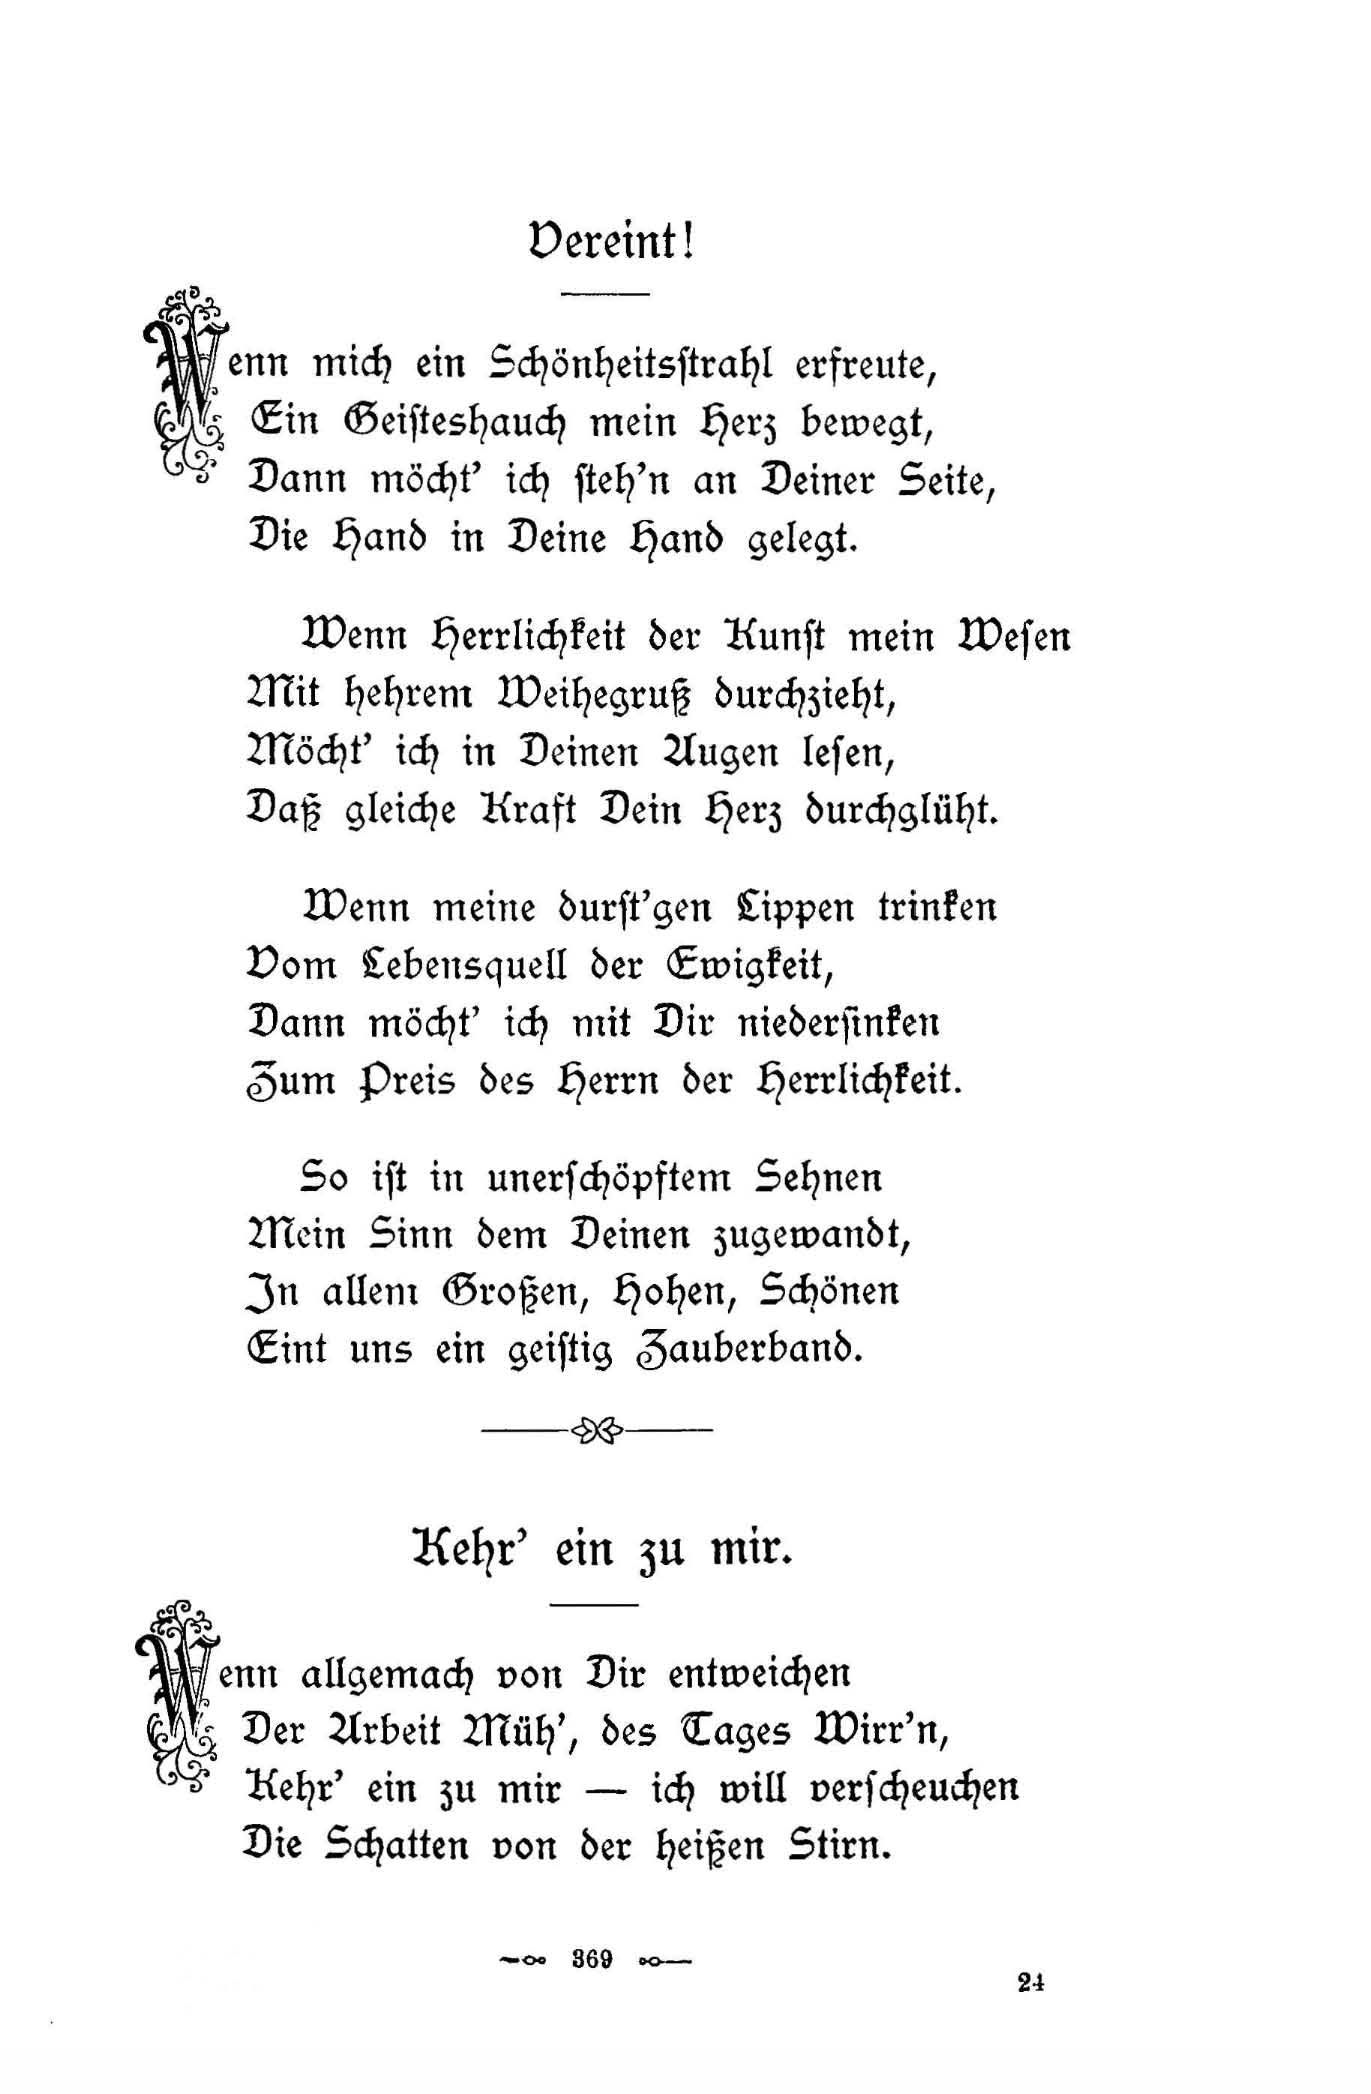 Vereint! (1896) | 1. (369) Main body of text